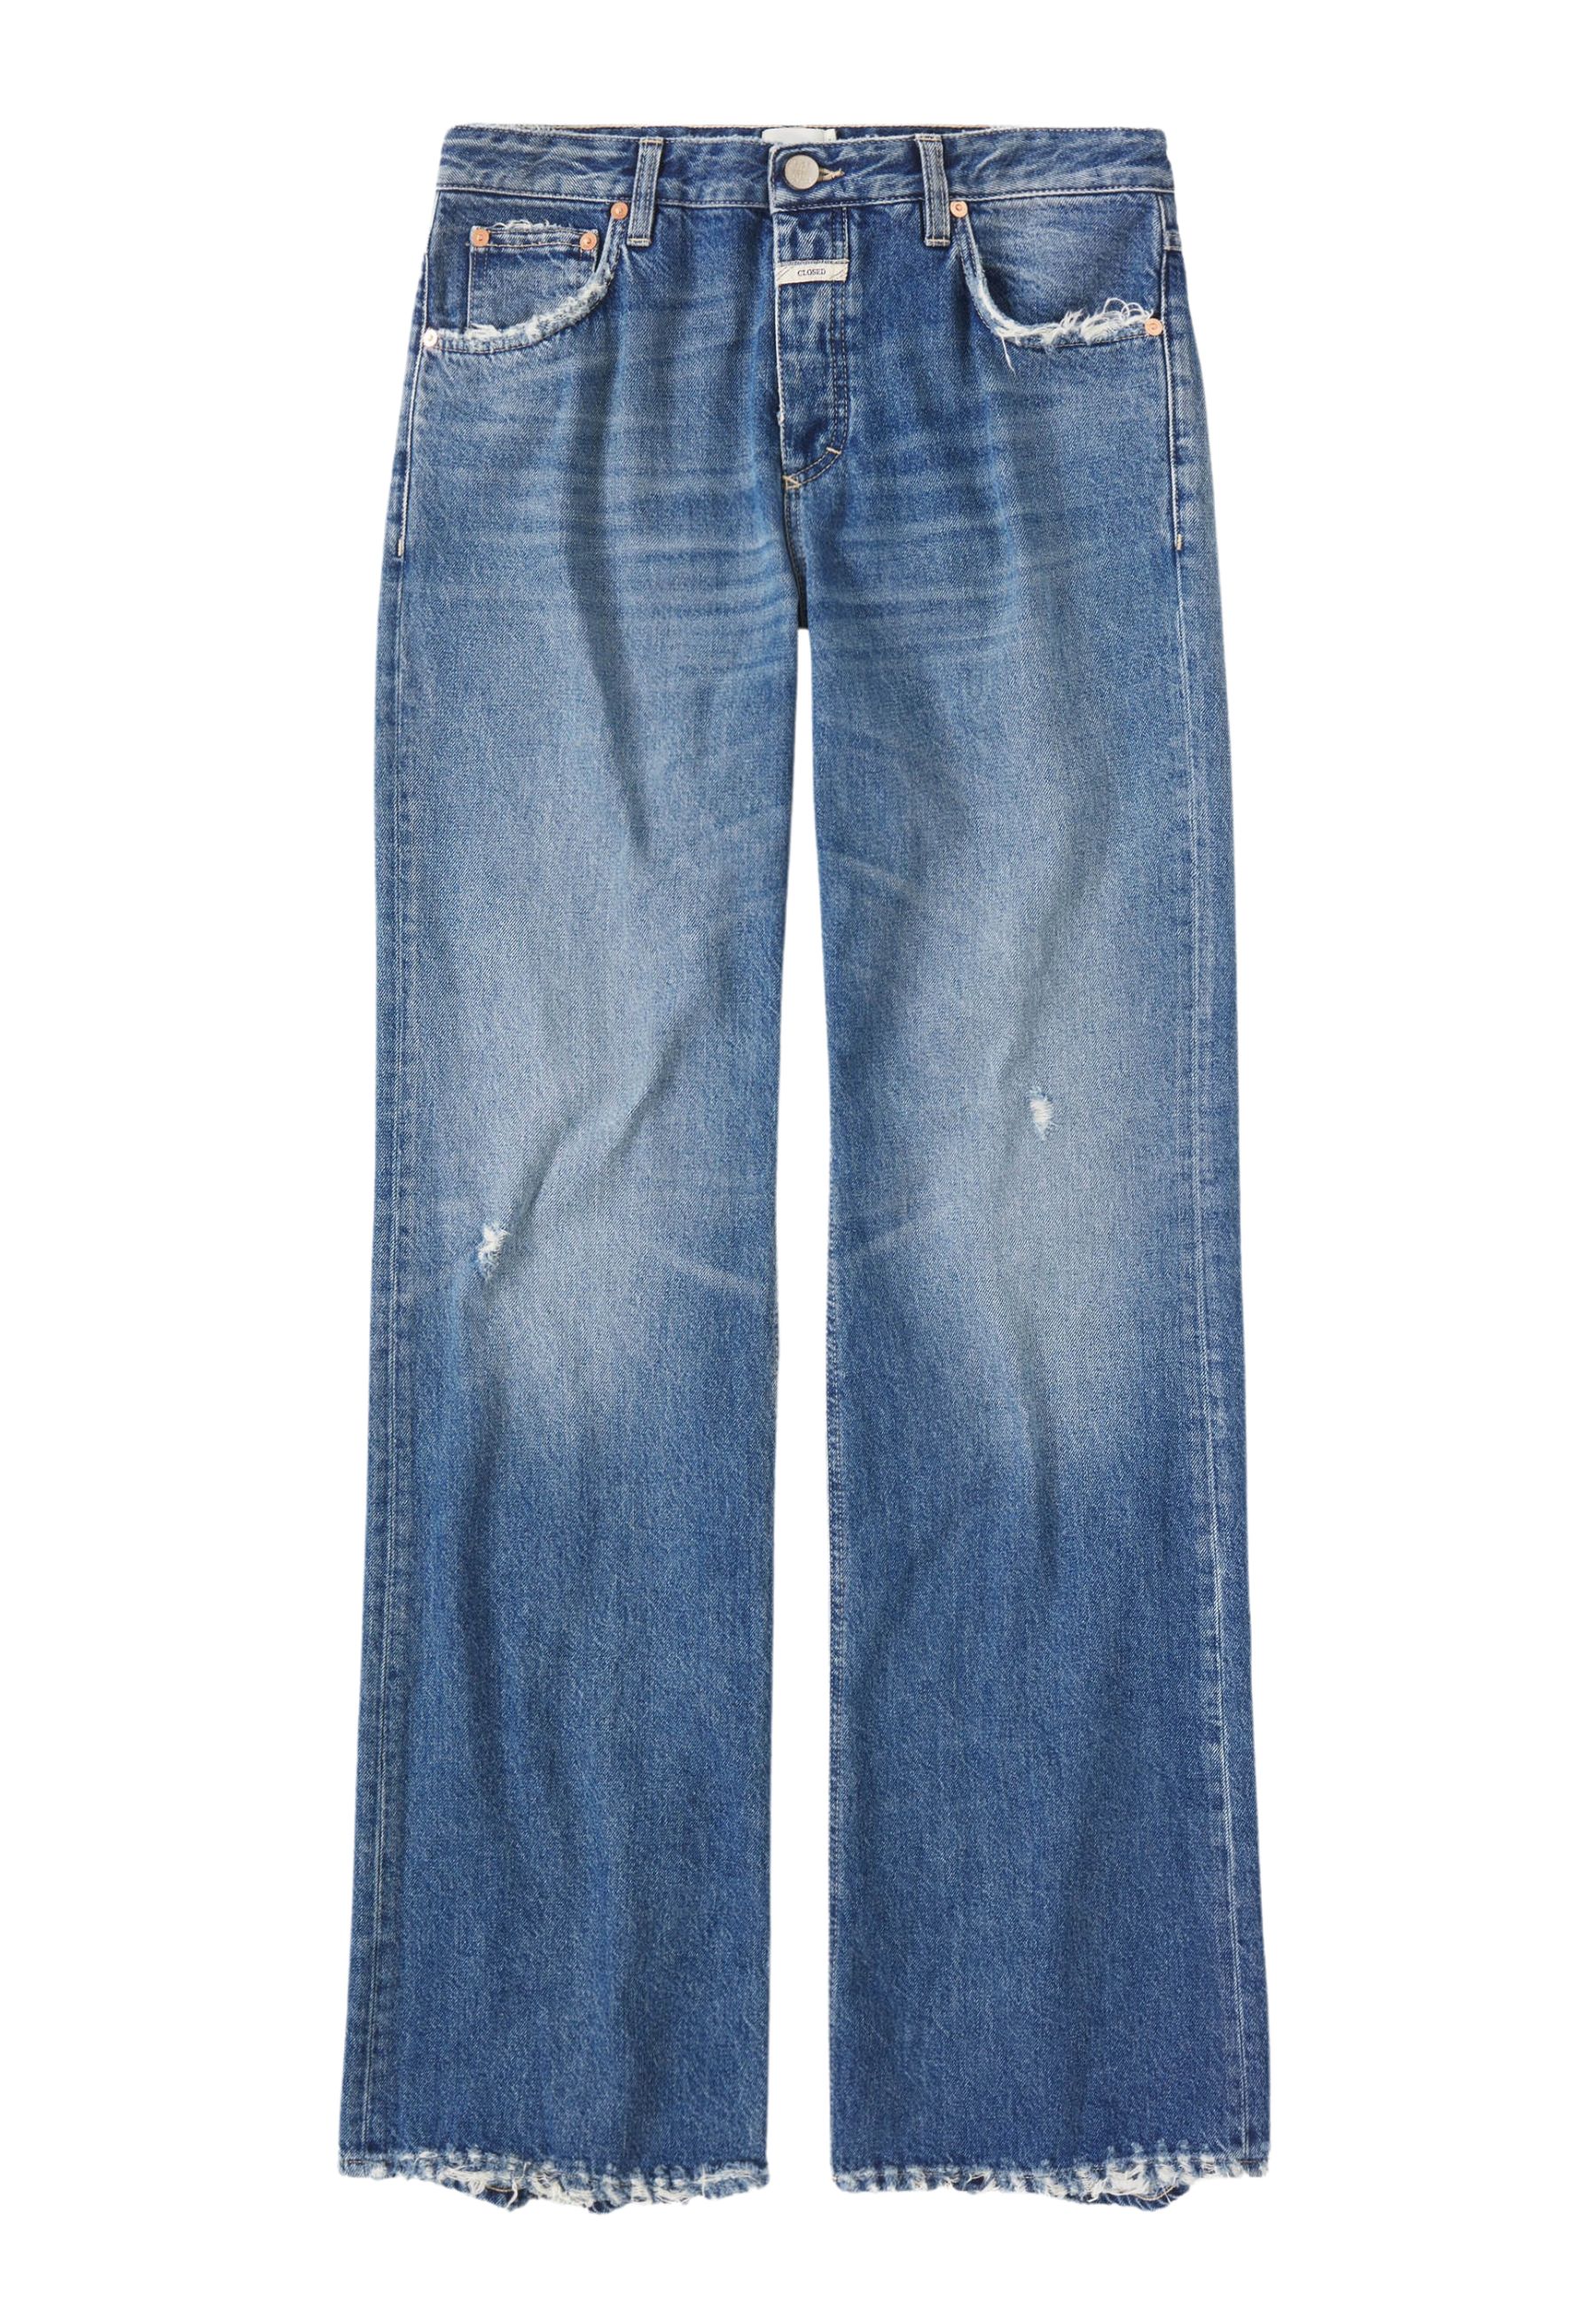 Closed Jeans Middenblauw Katoen maat 26/30 Gillan flared jeans middenblauw